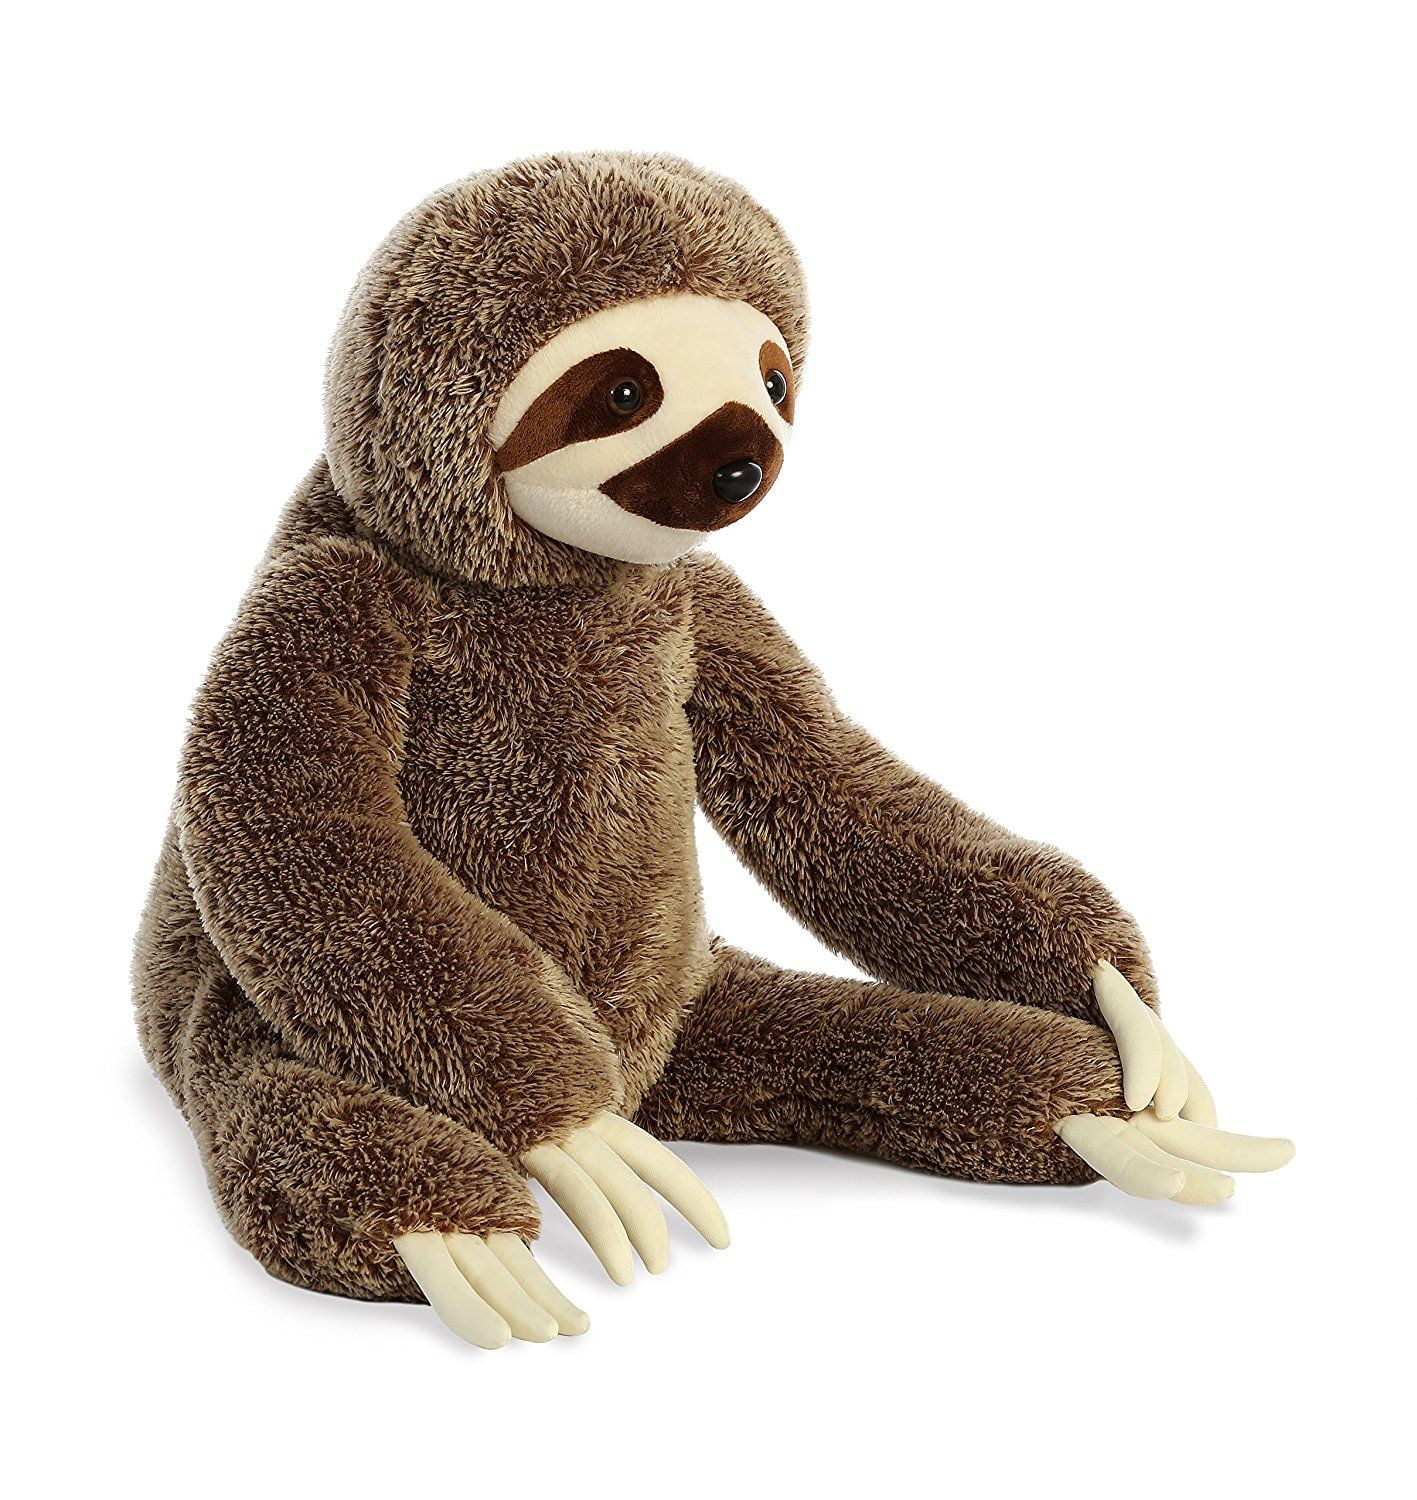 15 Inch Three Toed Sloth Plush Stuffed Animal by Aurora 